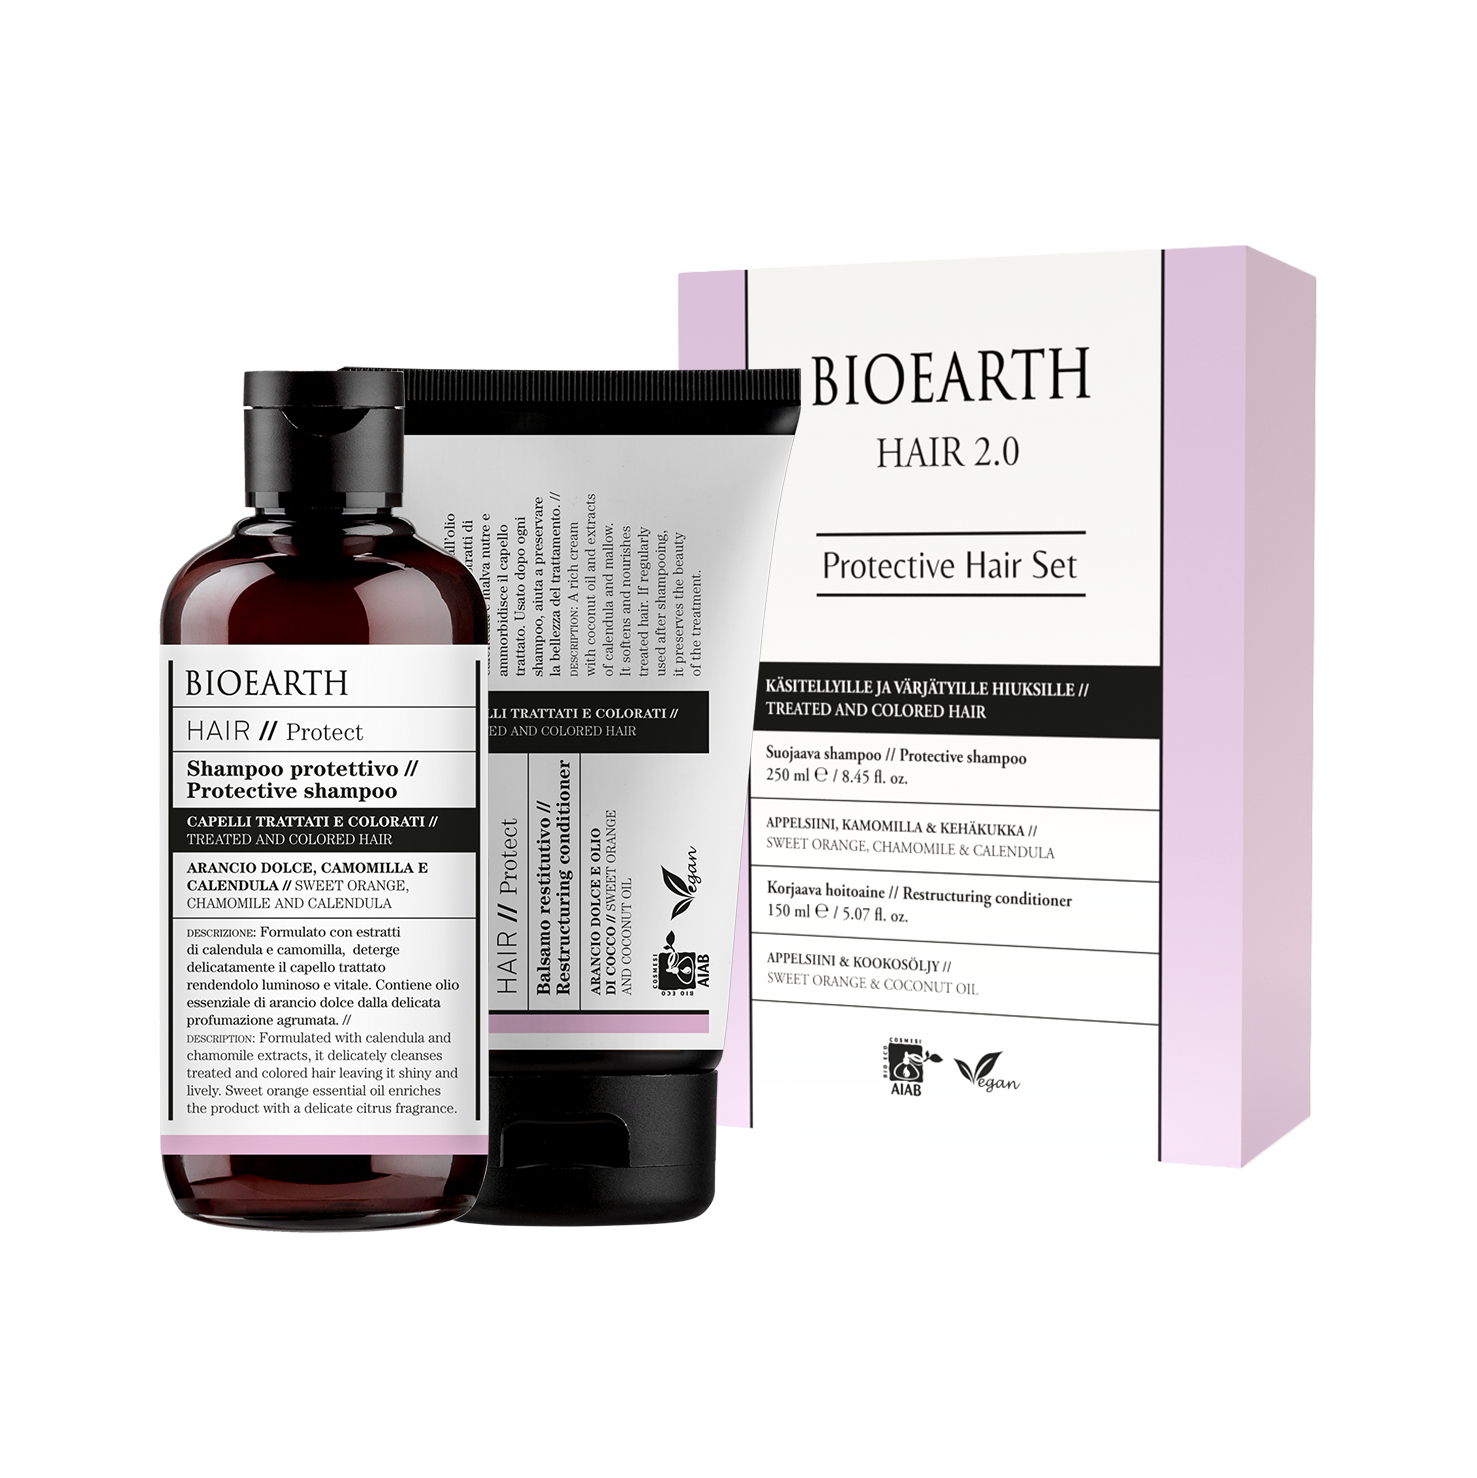 Bioearth Hair 2.0 Protective Hair Set